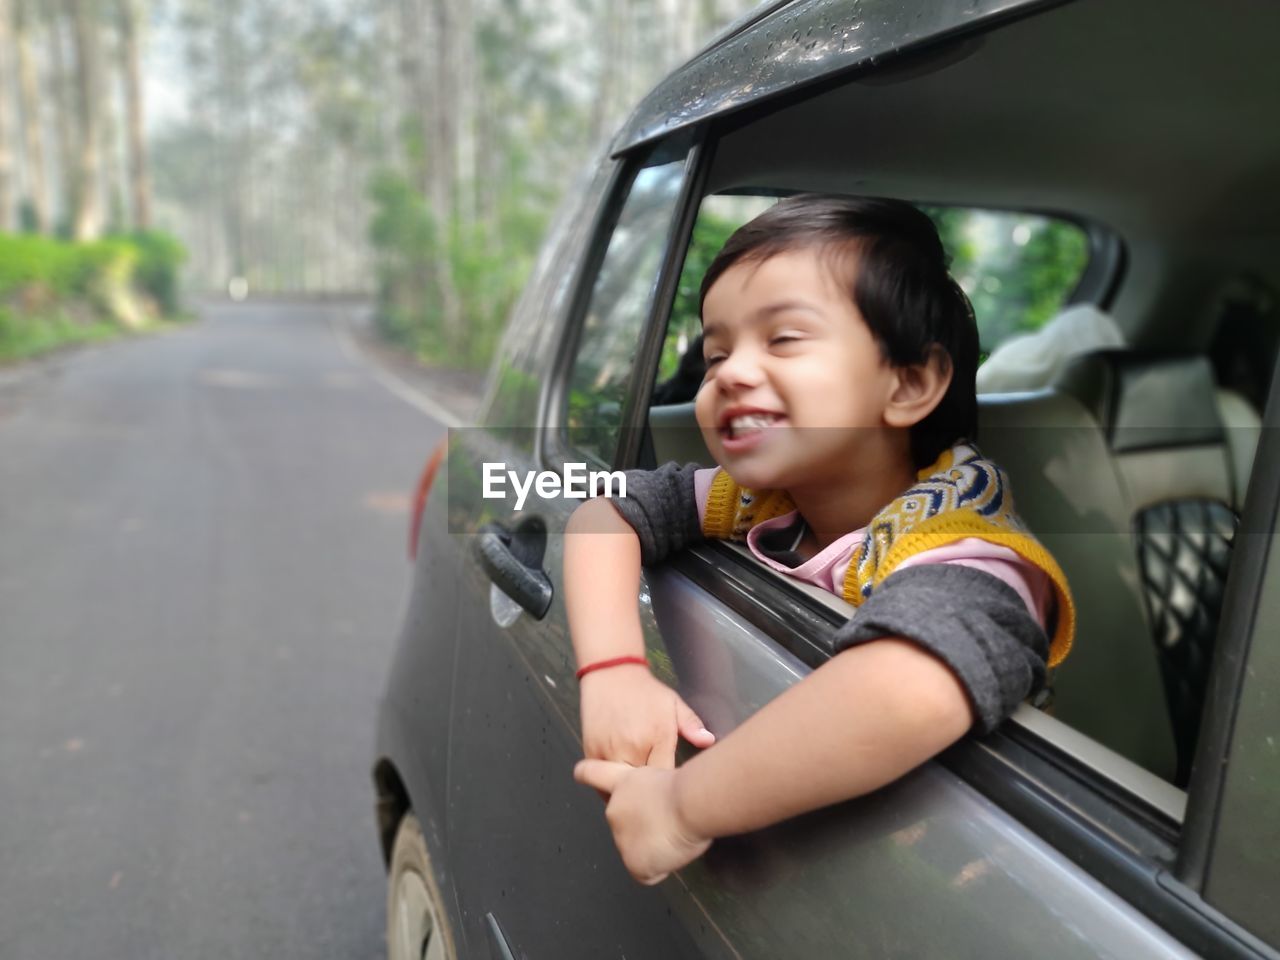 Happy kid in car